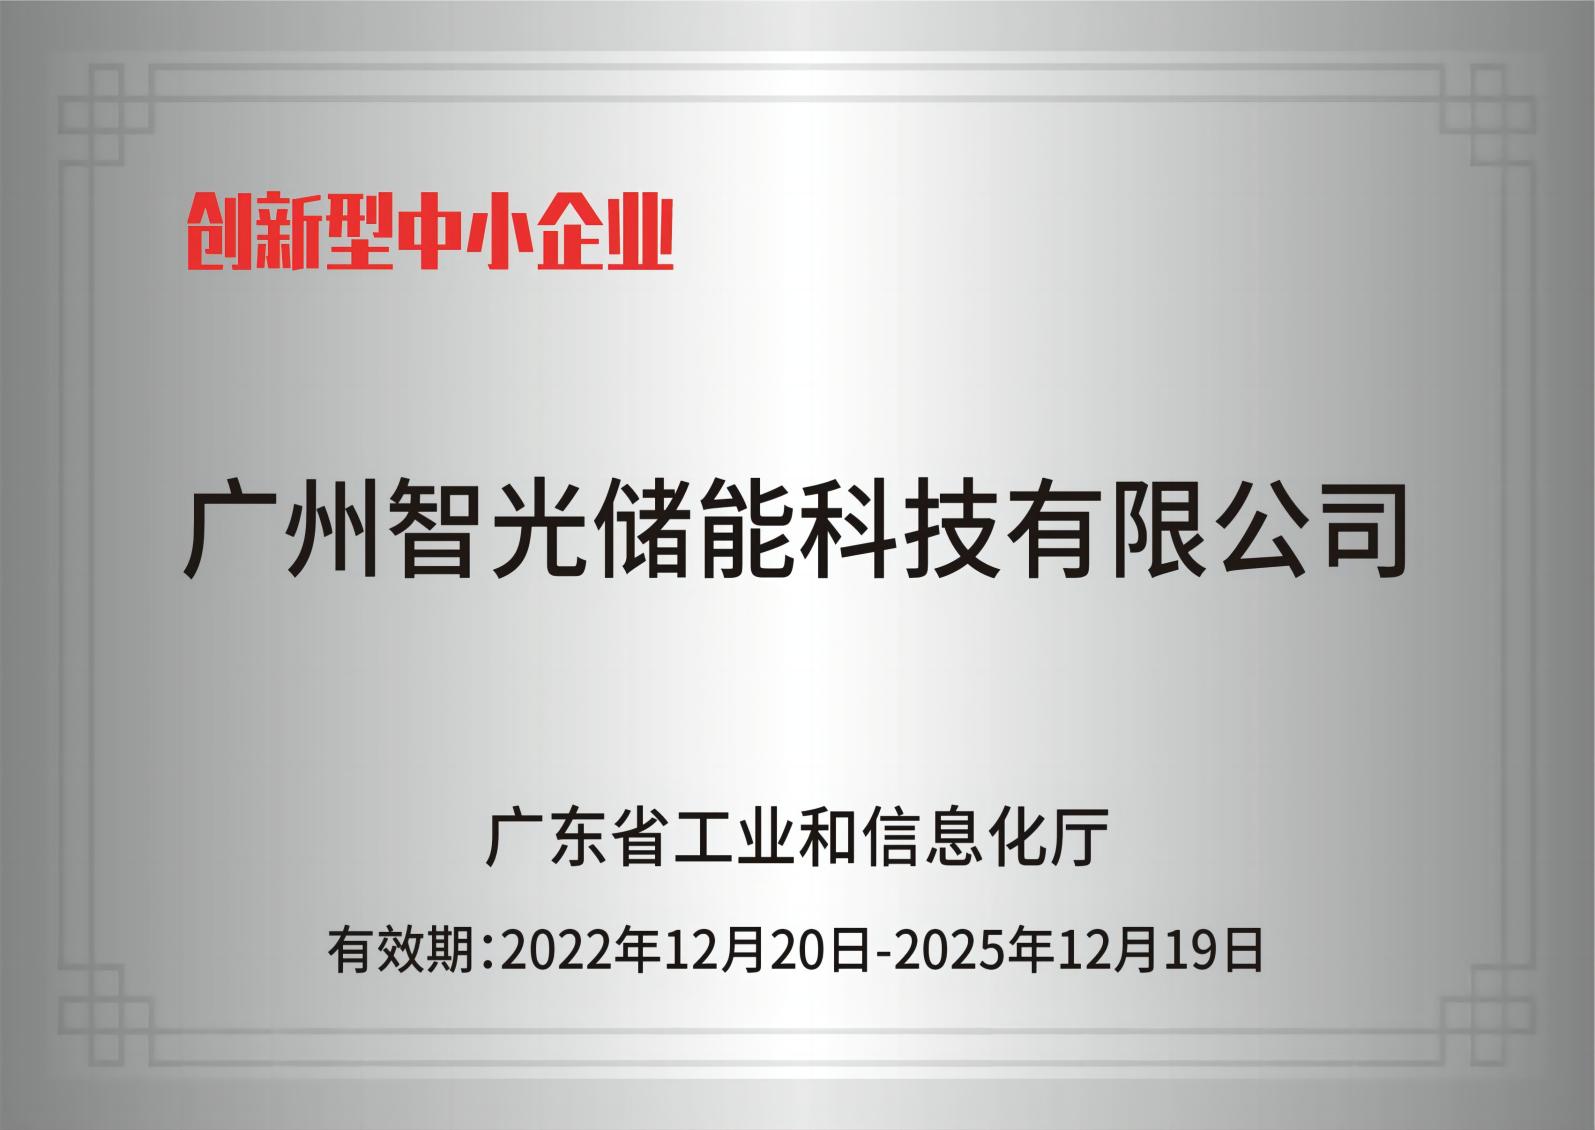 Zhiguang Energy Storage——Innovative SMEs